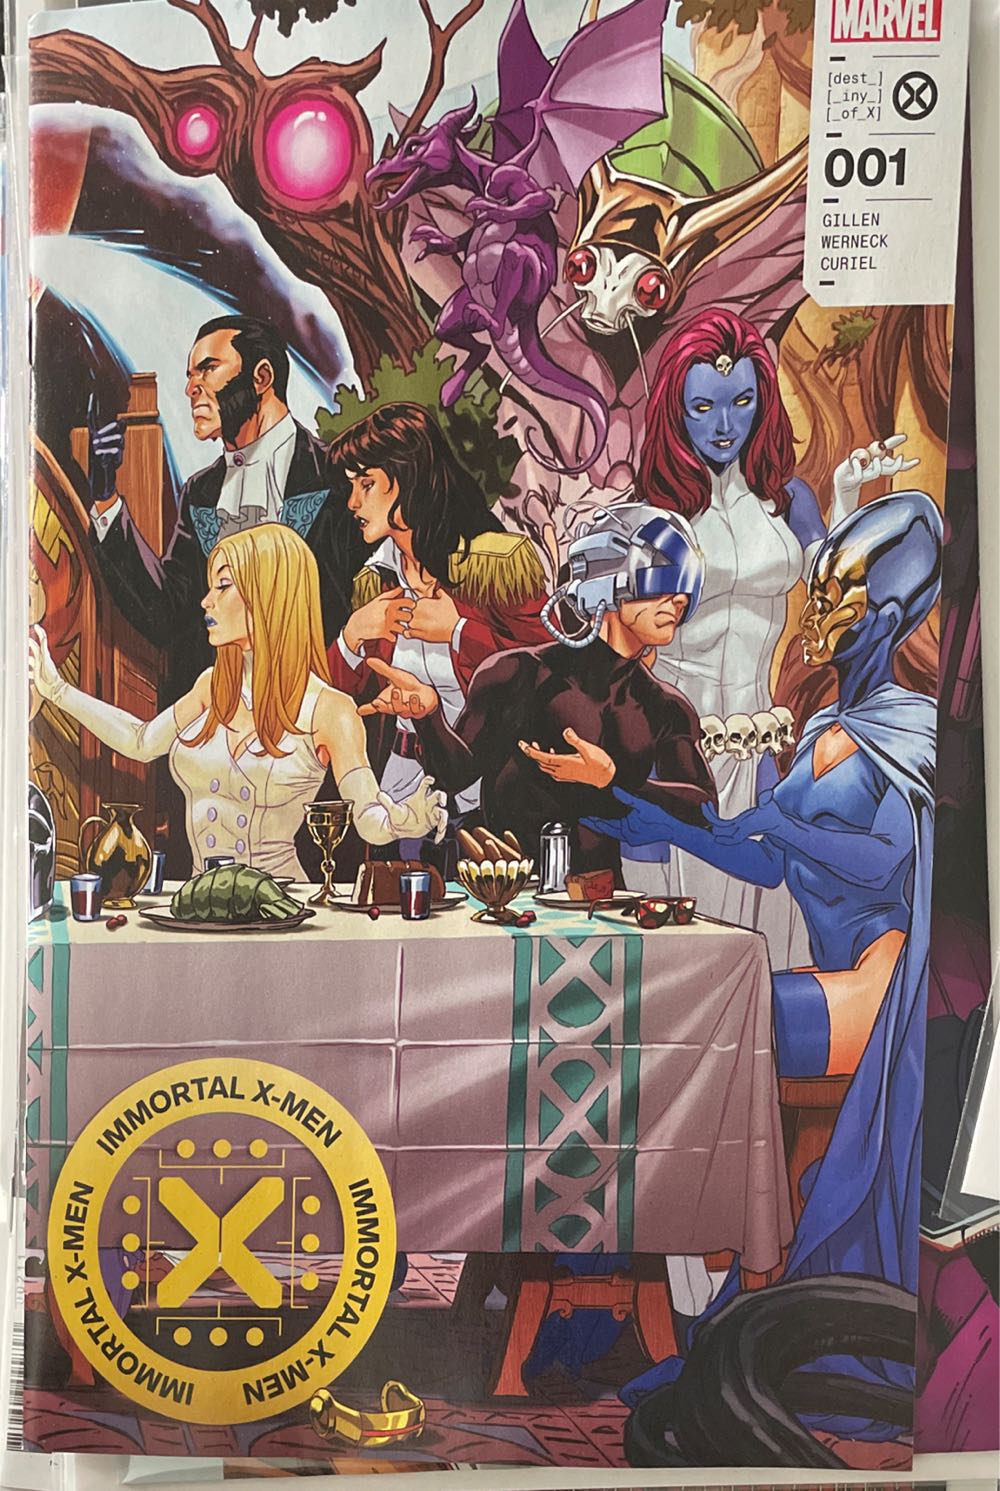 Immortal X-Men #1 - Marvel Comics (1 - May 2022) comic book collectible [Barcode 75960620004700111] - Main Image 1